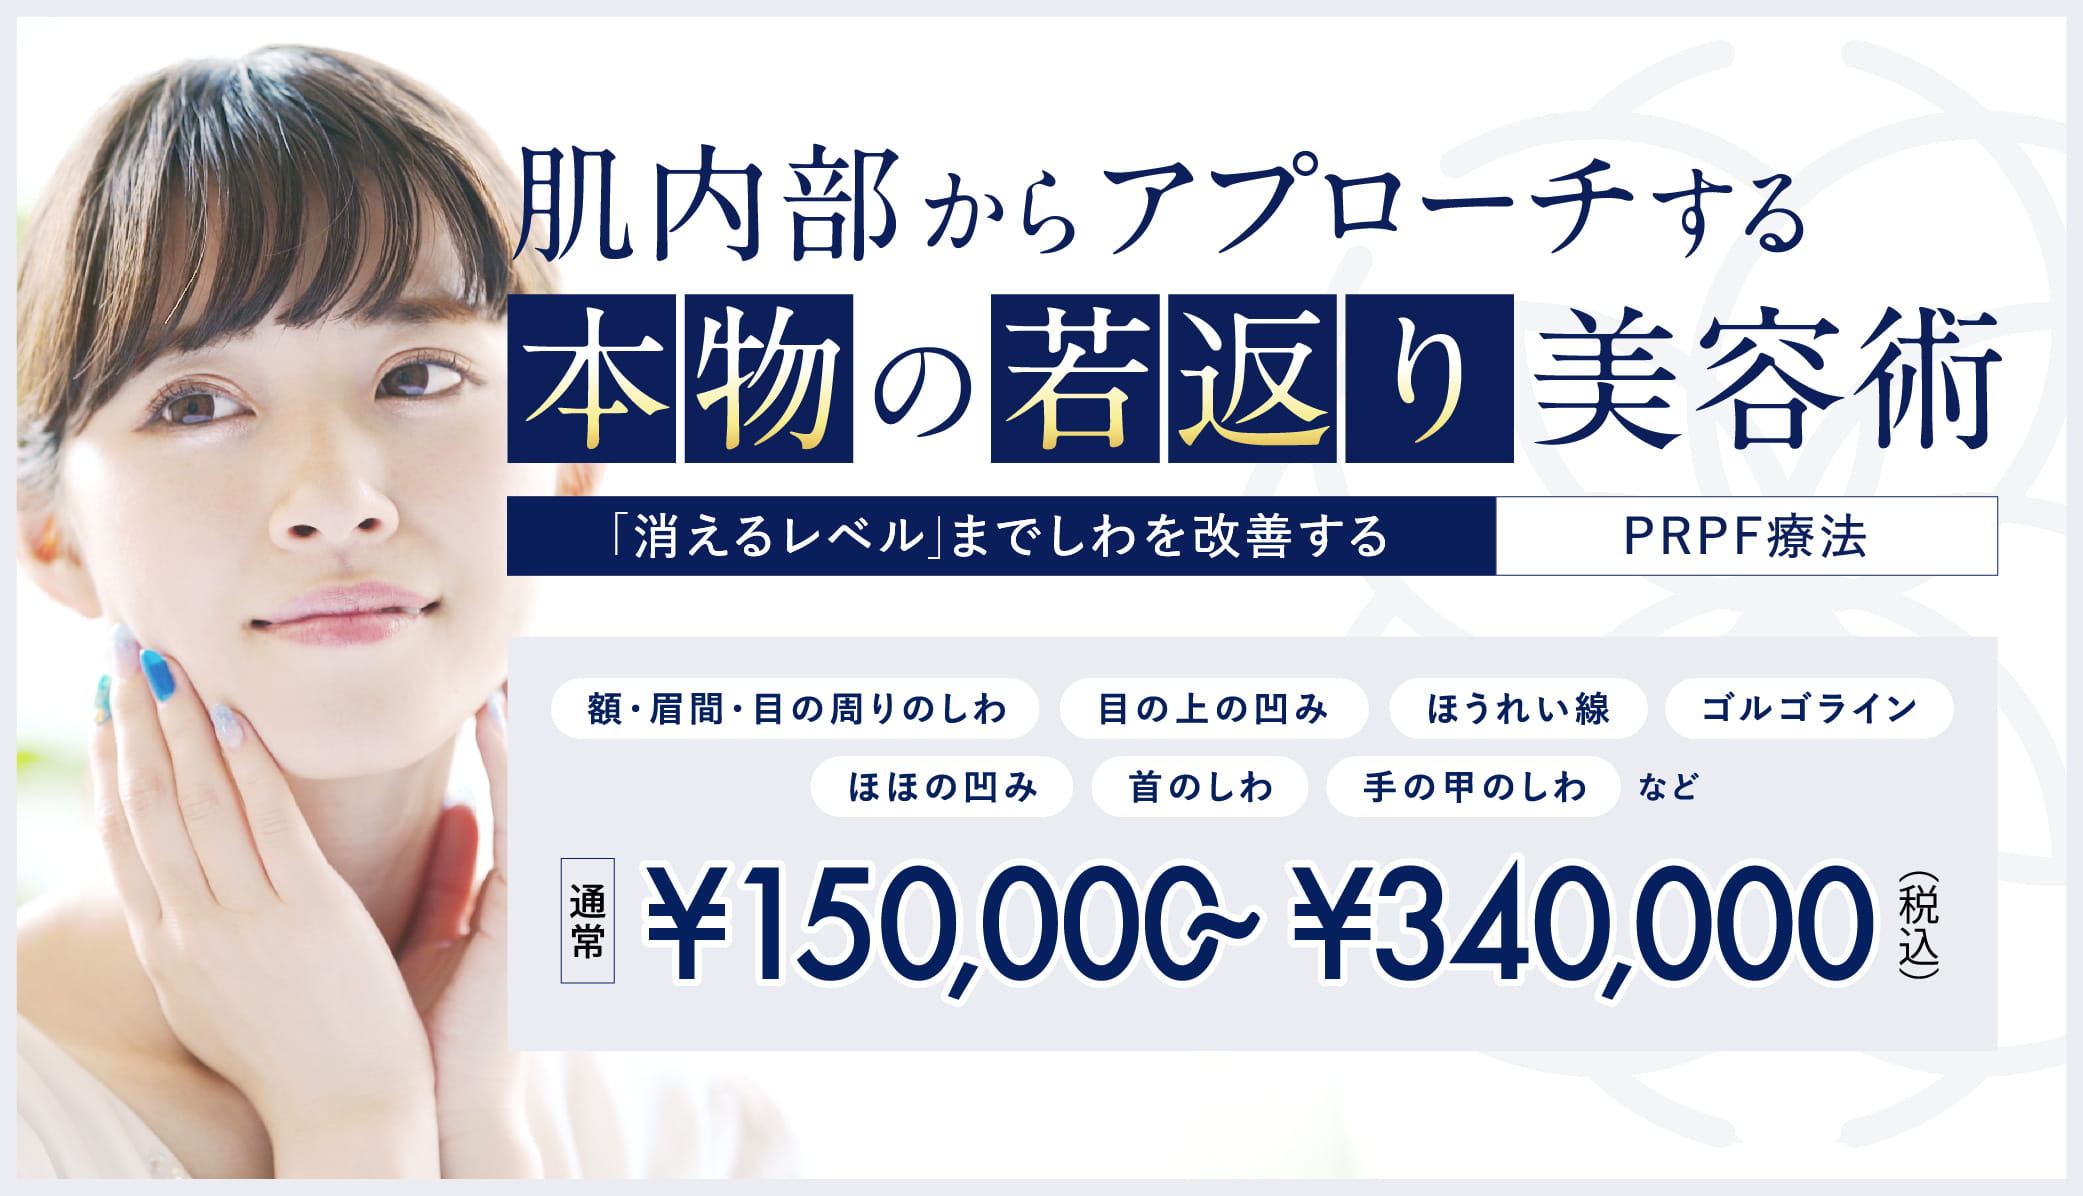 Pono clinic（ポノクリニック）東京新宿に最高技術の美容クリニックが誕生